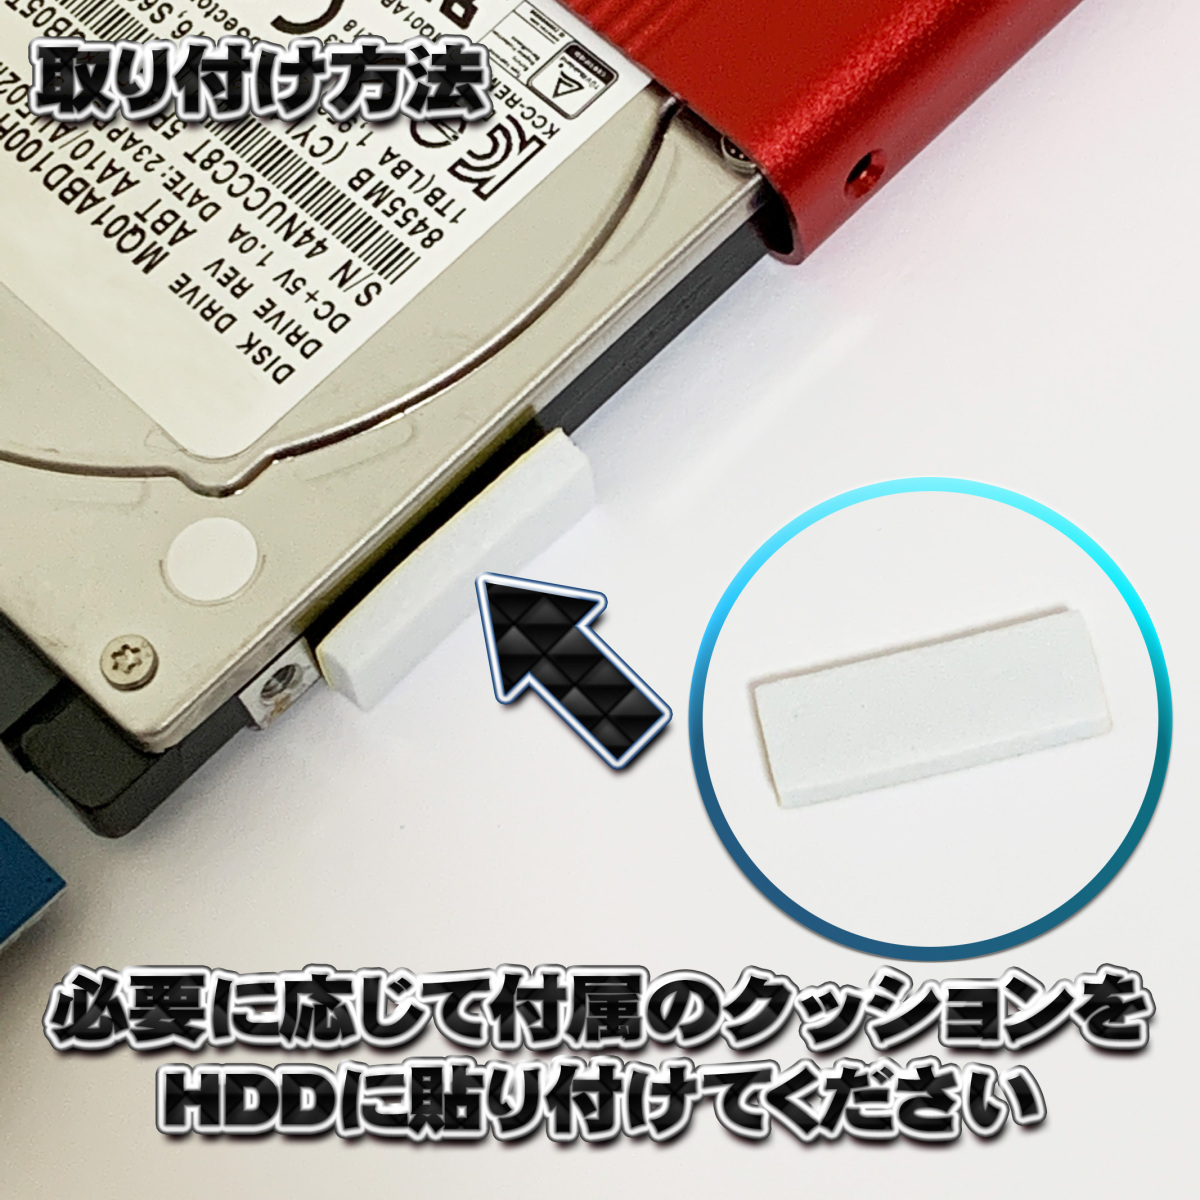 【USB2.0対応】【アルミケース】 2.5インチ HDD SSD ハードディスク 外付け SATA USB 接続 【シルバー】_画像3